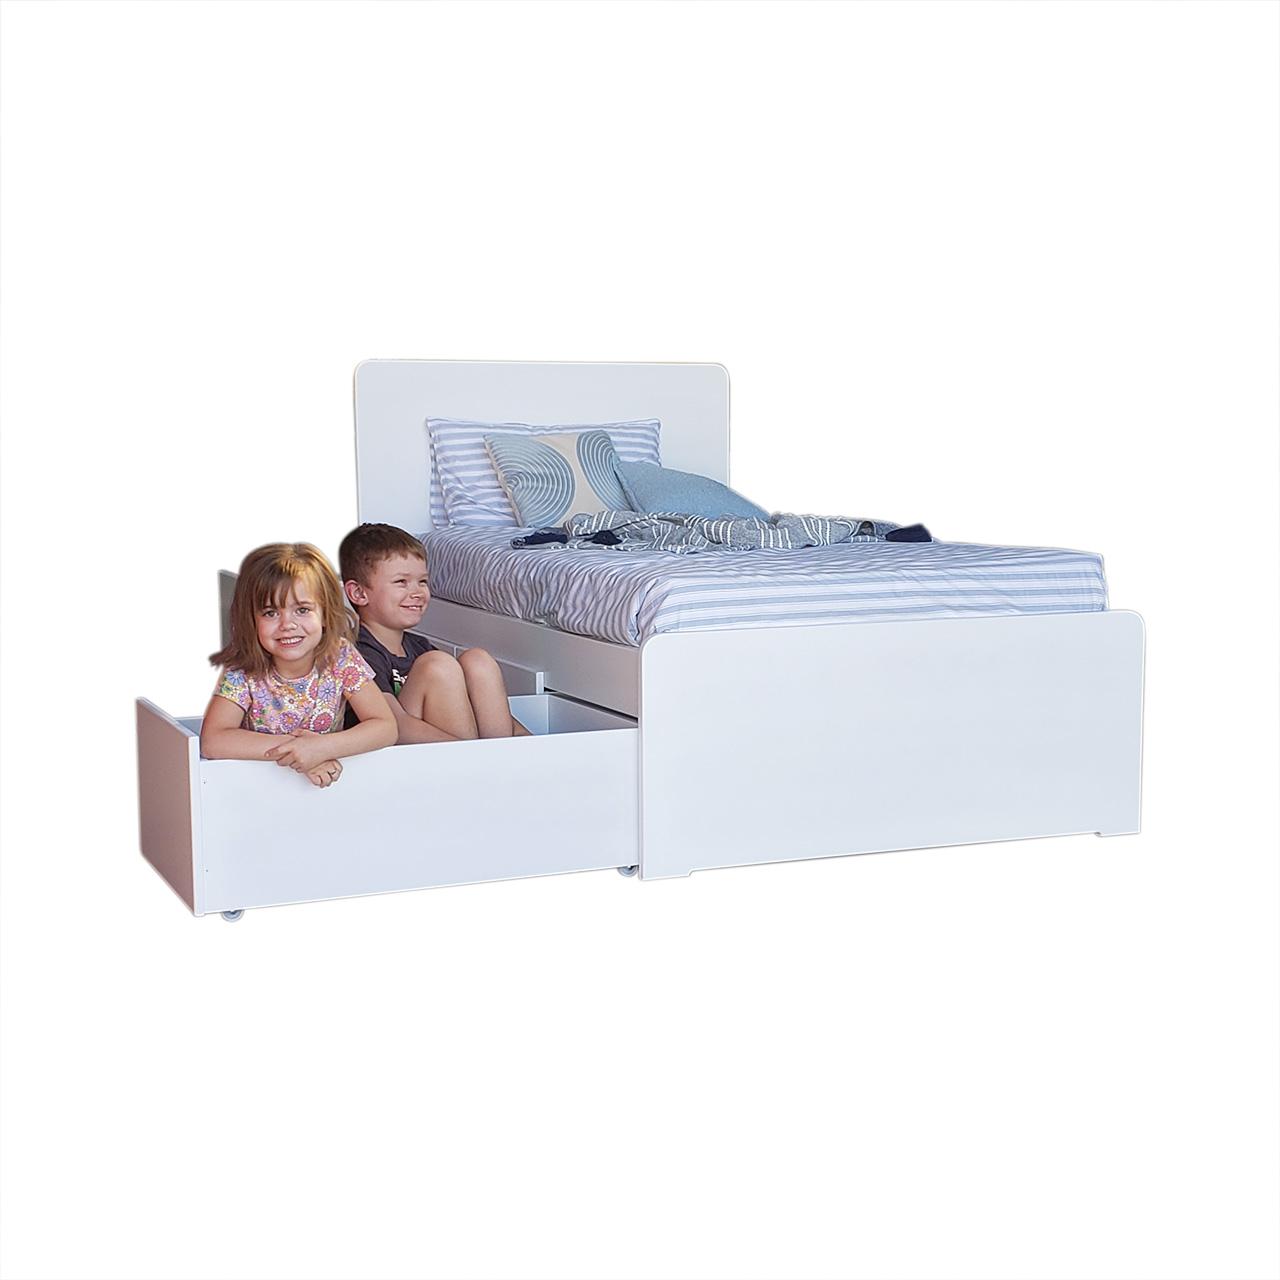 The Quokka King Single bed with 3 HUGE under bed storage drawers Australian Furniture Makers Pty Ltd Ballarat 0449 048 686